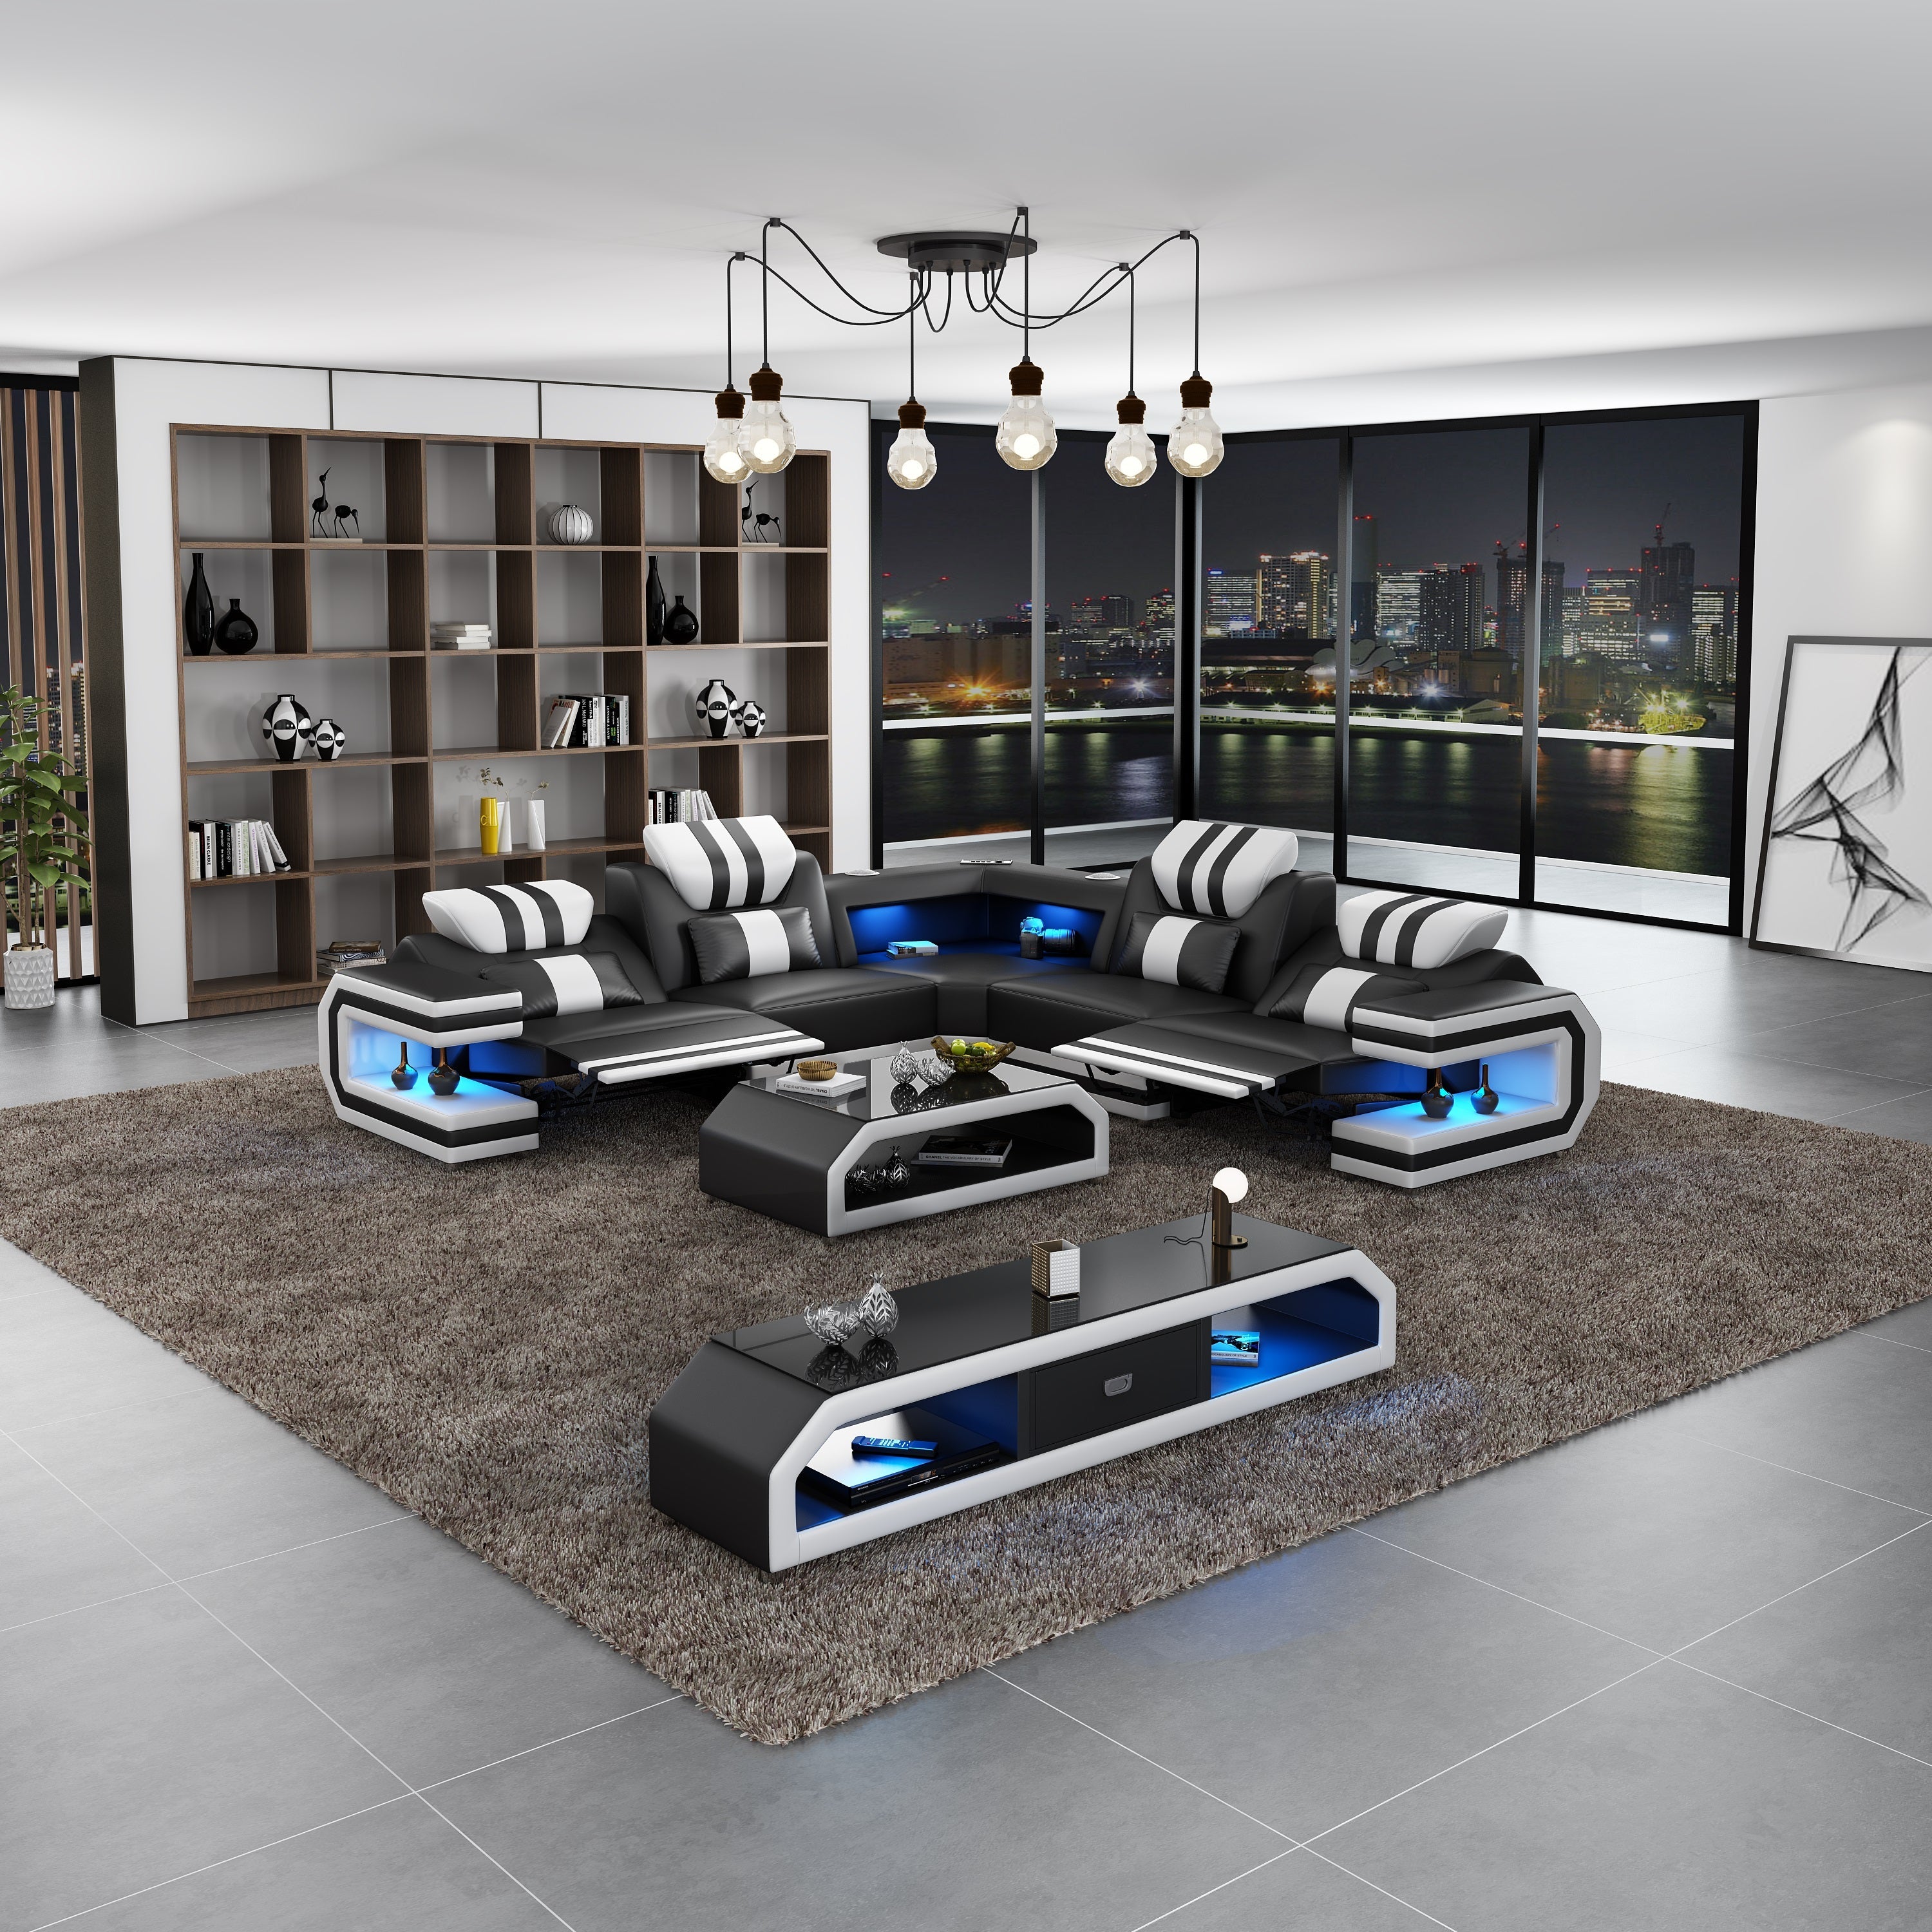 European Furniture - Lightsaber LED Sectional Dual Recliners Black White Italian Leather - LED-87770-BW-DRR - New Star Living